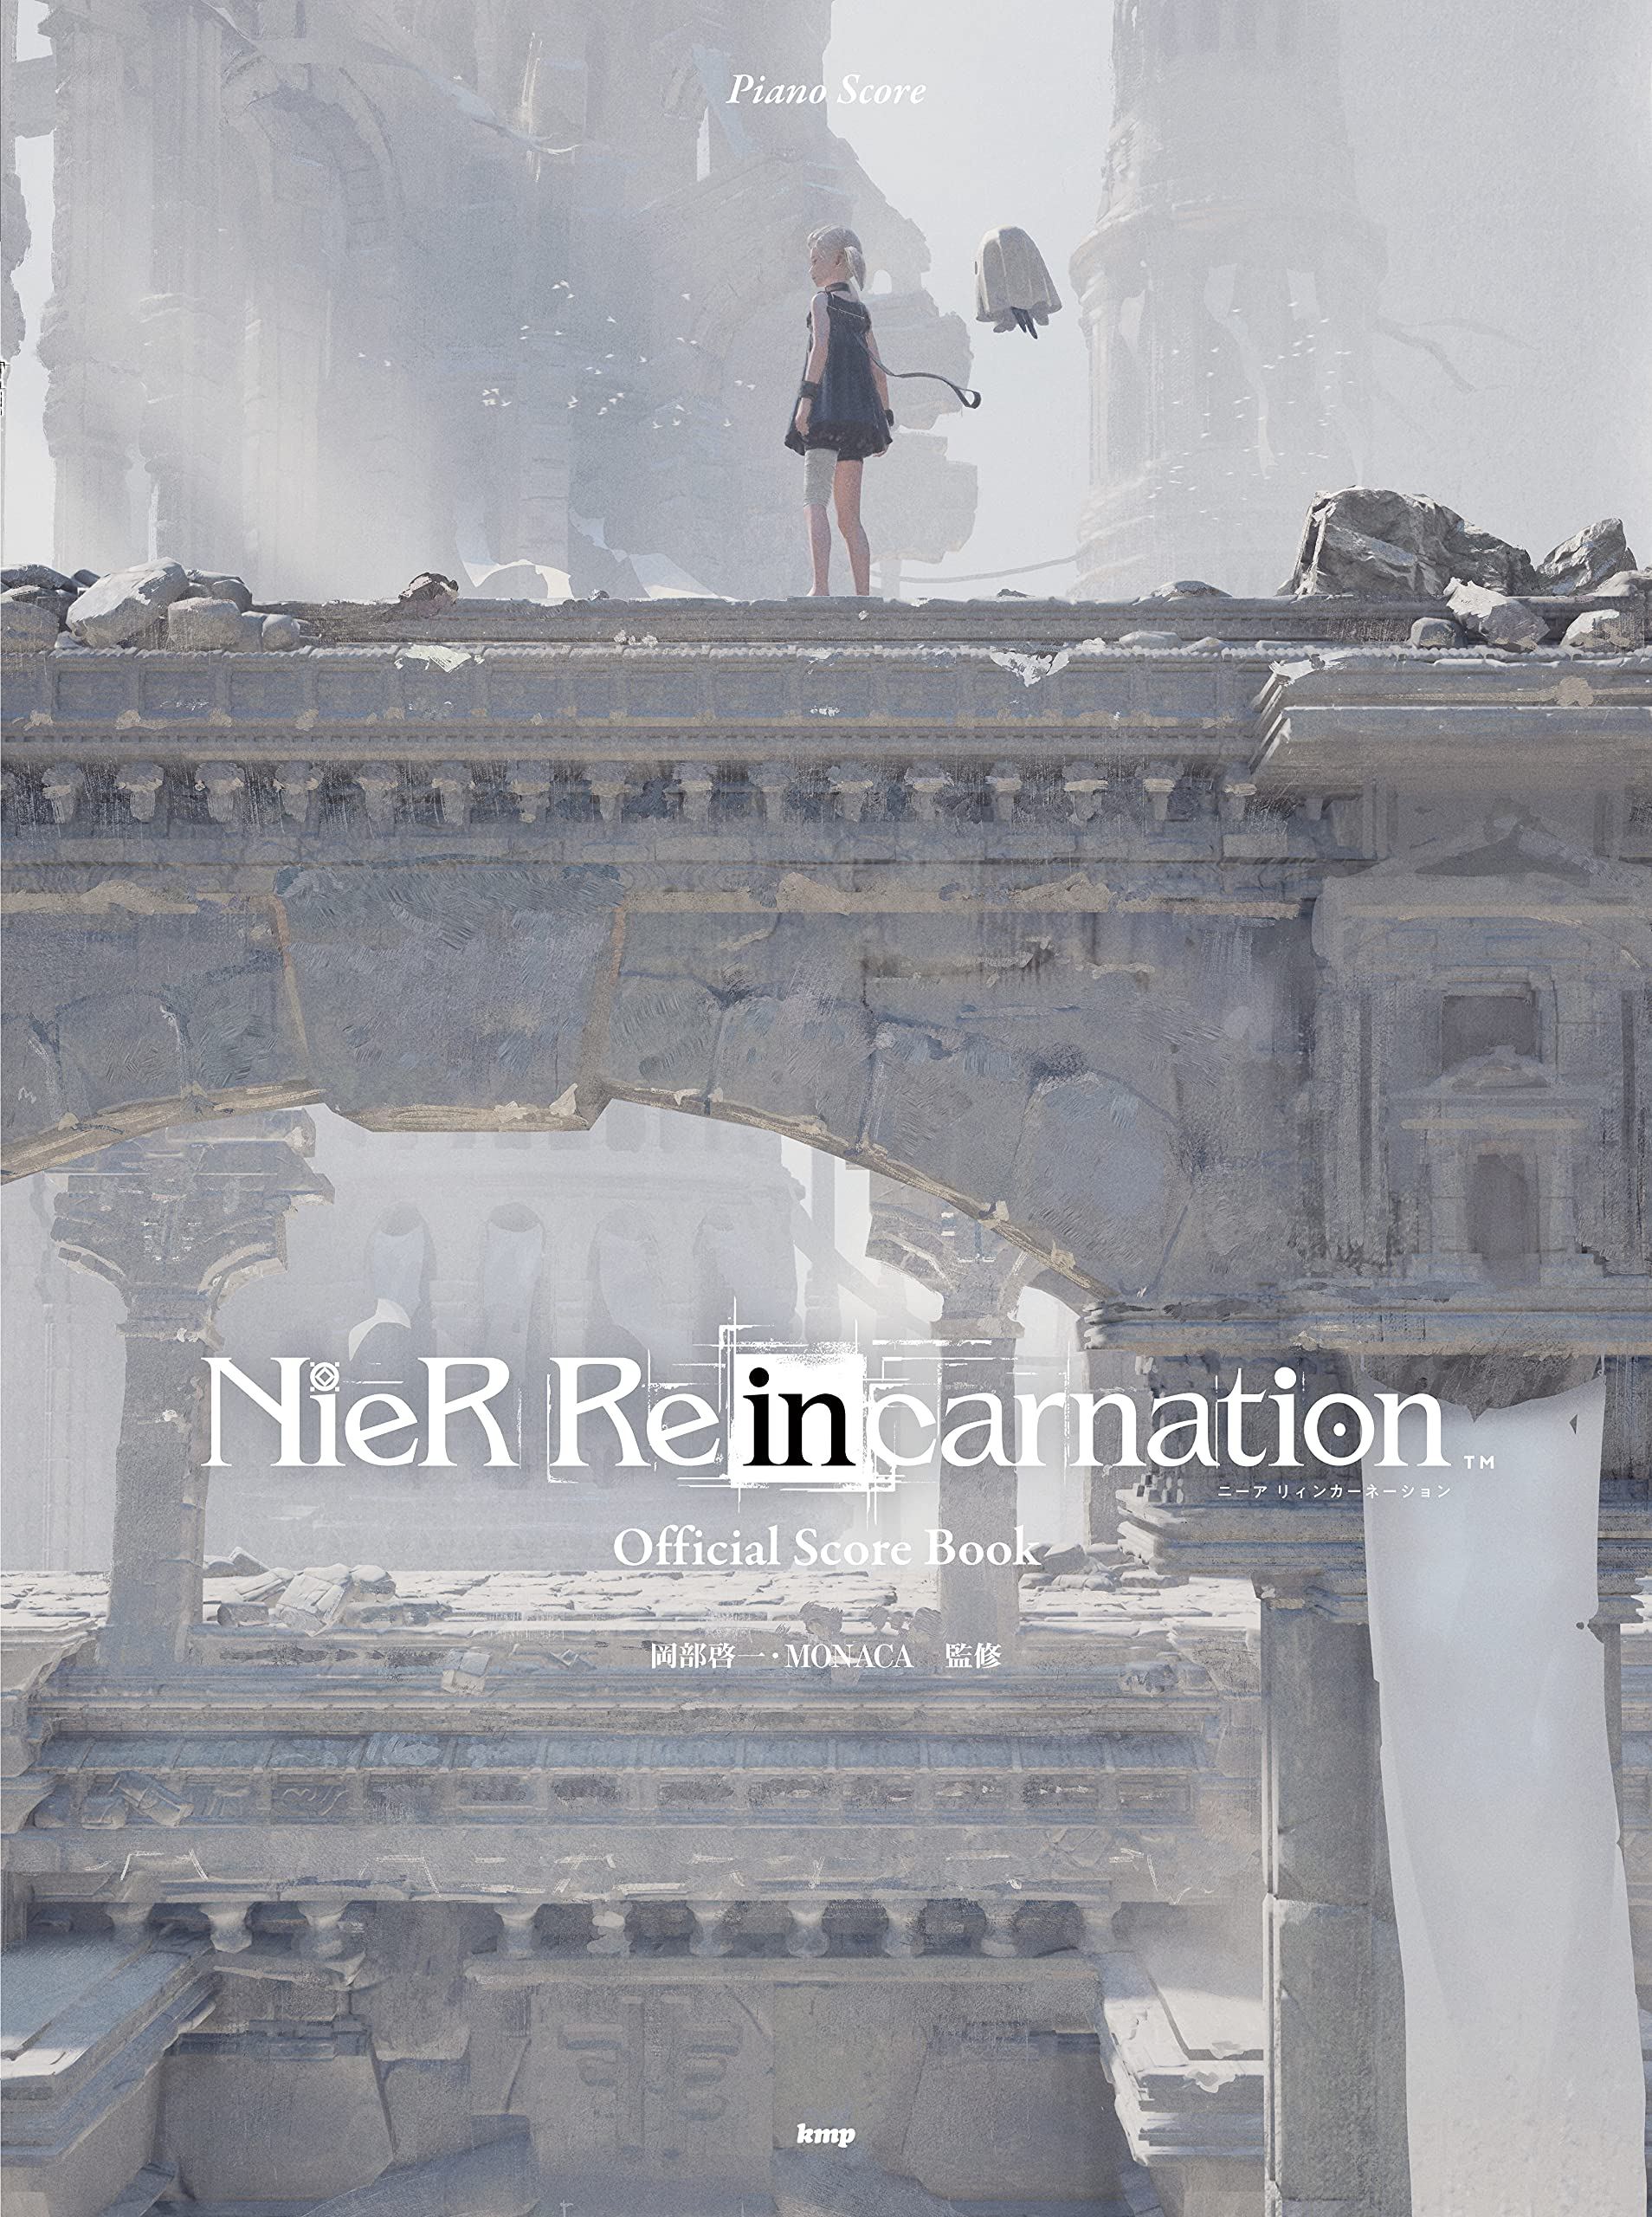 NieR Nier Reincarnation Winning Item Limited Poster Nier Automata